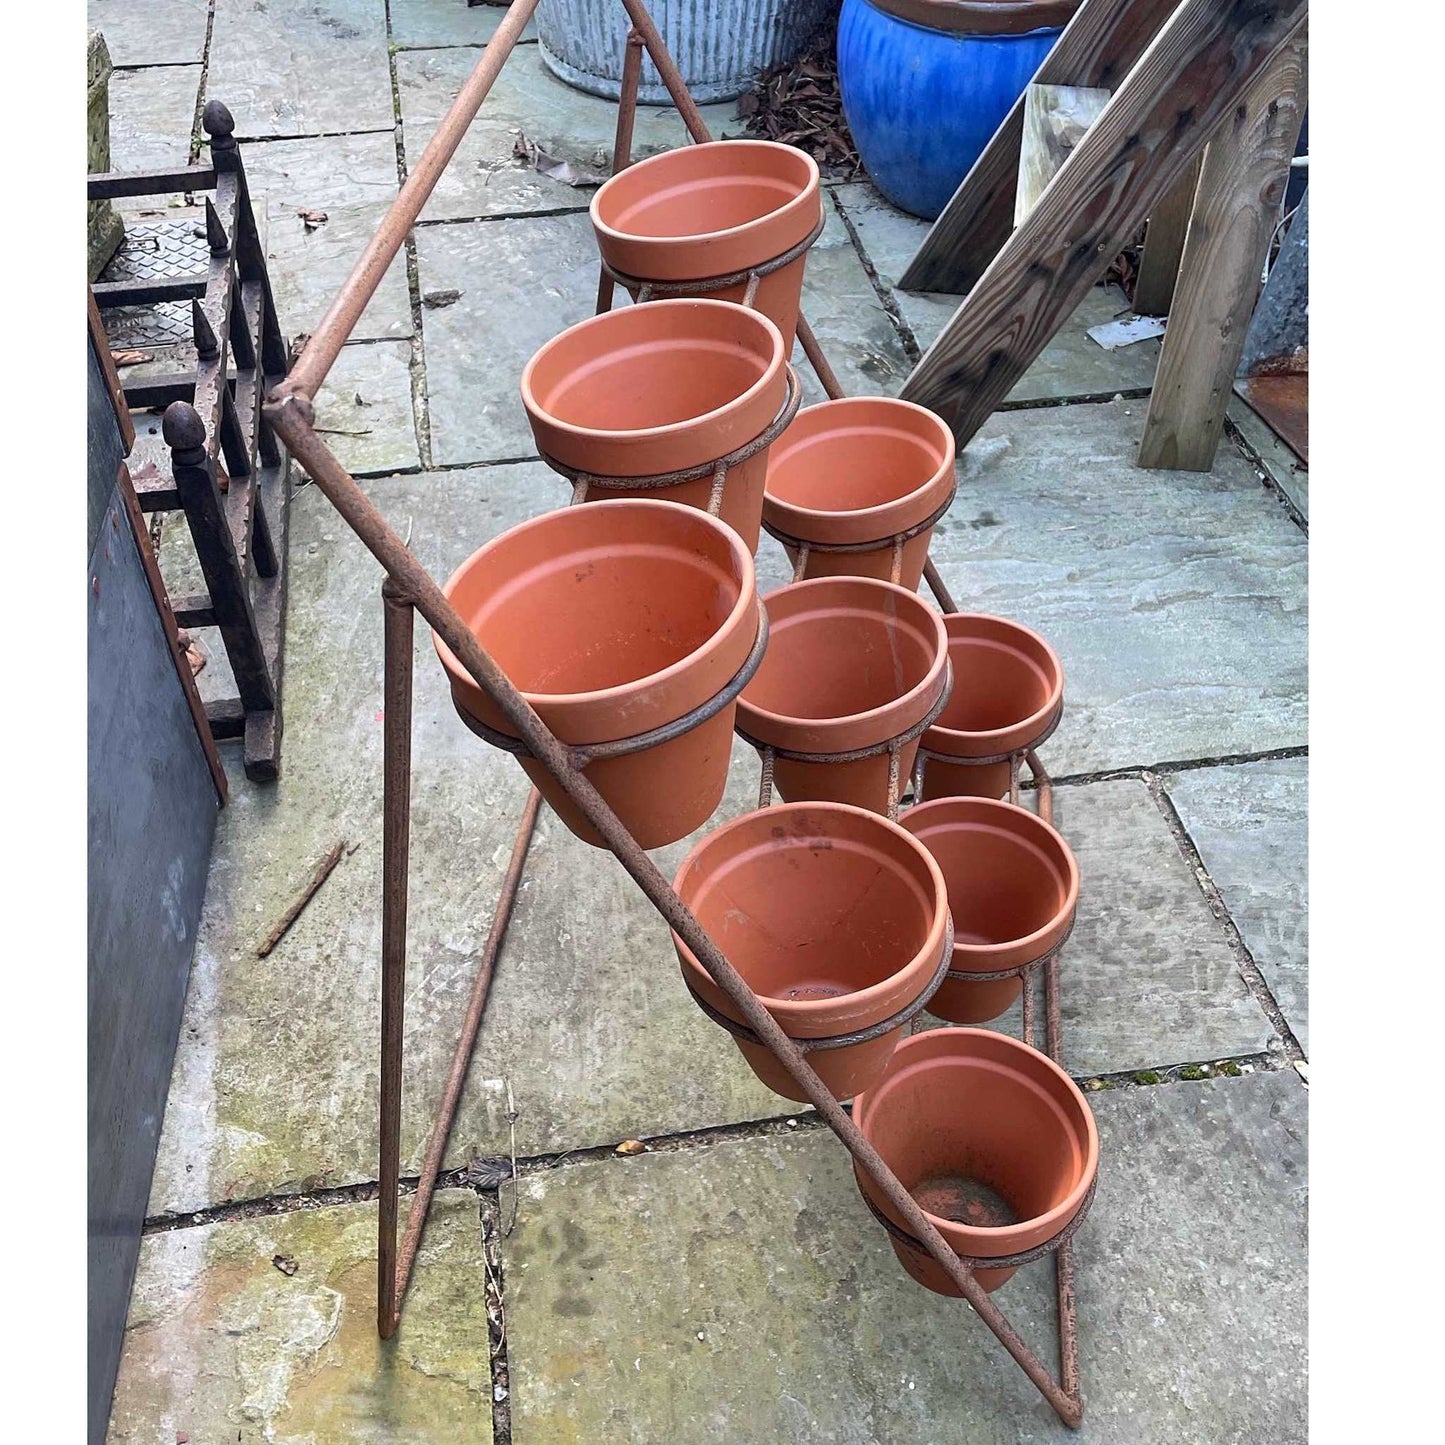 Metal tiered plant theatre pot stand 9 pot